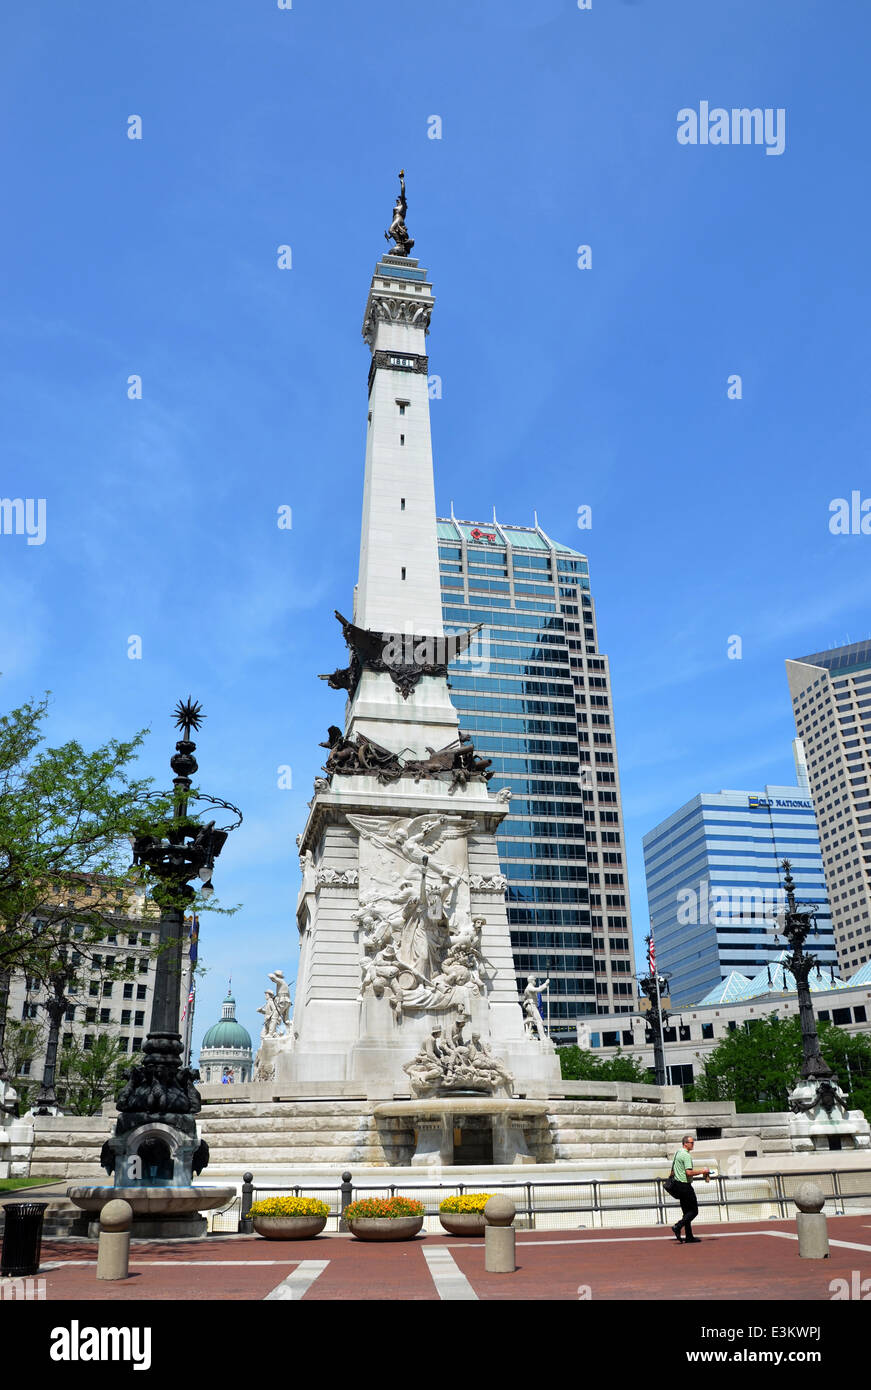 INDIANAPOLIS - Juni 16: The Indiana Soldiers and Sailors' Monument gezeigt 16. Juni 2014, ist im Kreis in der Mitte des Denkmals in Stockfoto